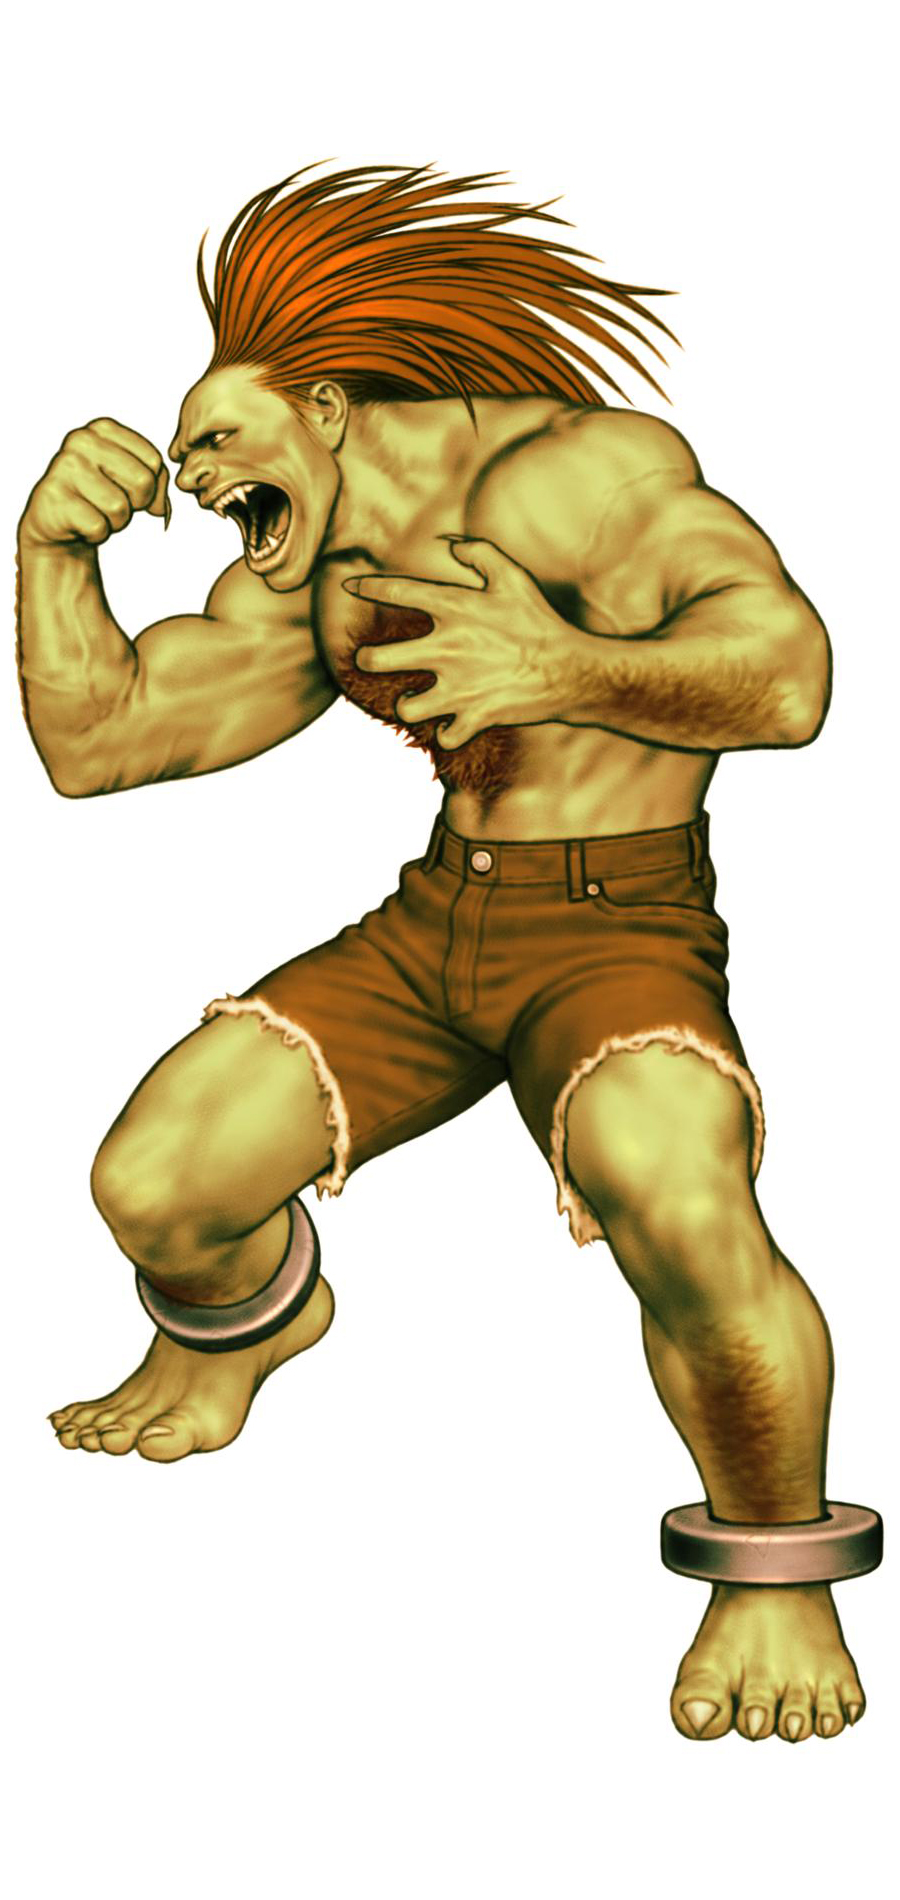 Blanka Street Fighter Design - Original Artwork - Street Fighter